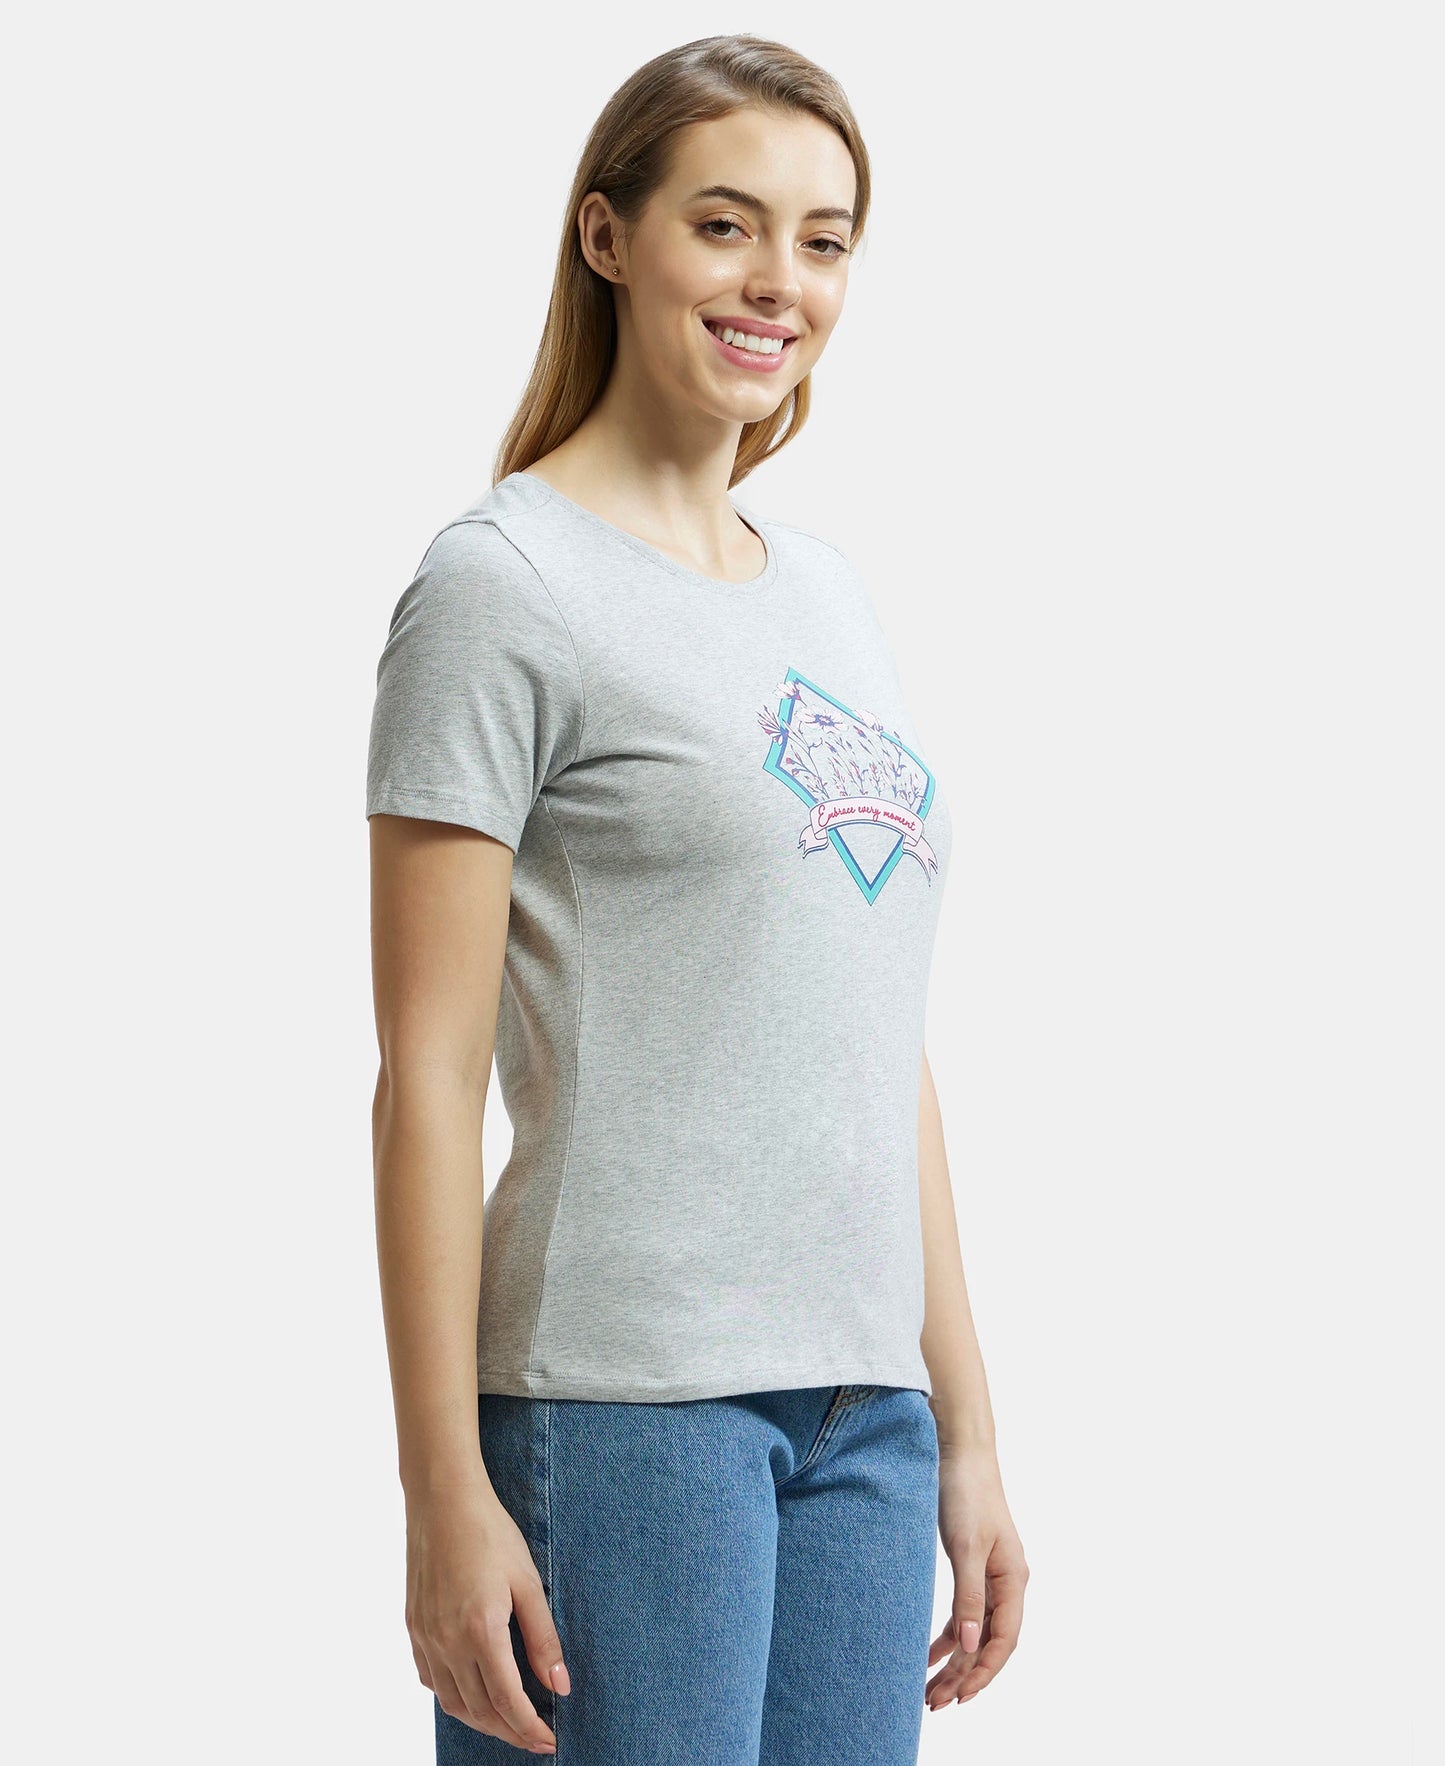 Super Combed Cotton Elastane Stretch Regular Fit Graphic Printed Round Neck Half Sleeve T-Shirt  - Light grey melange print044-2